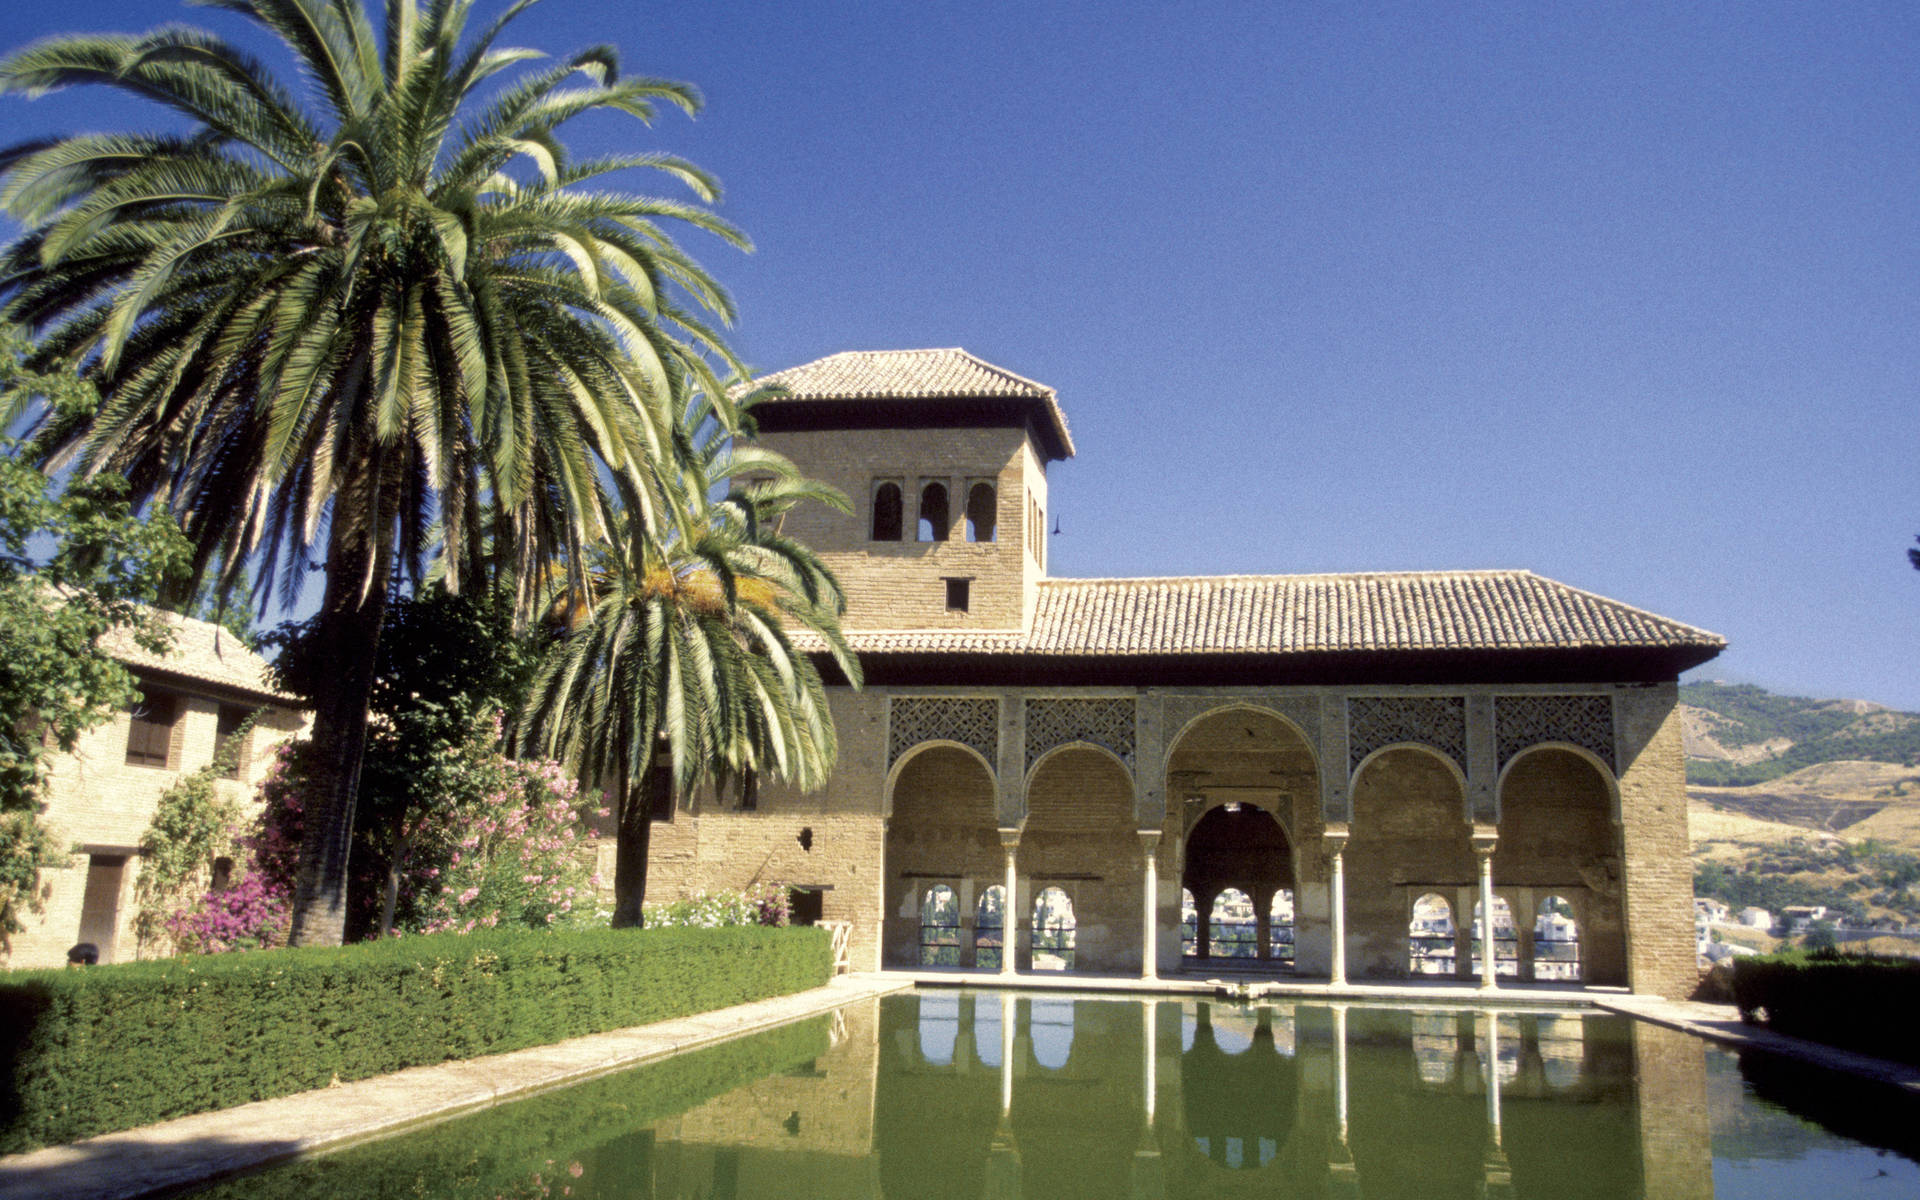 Alhambra 2560 X 1600 Wallpaper